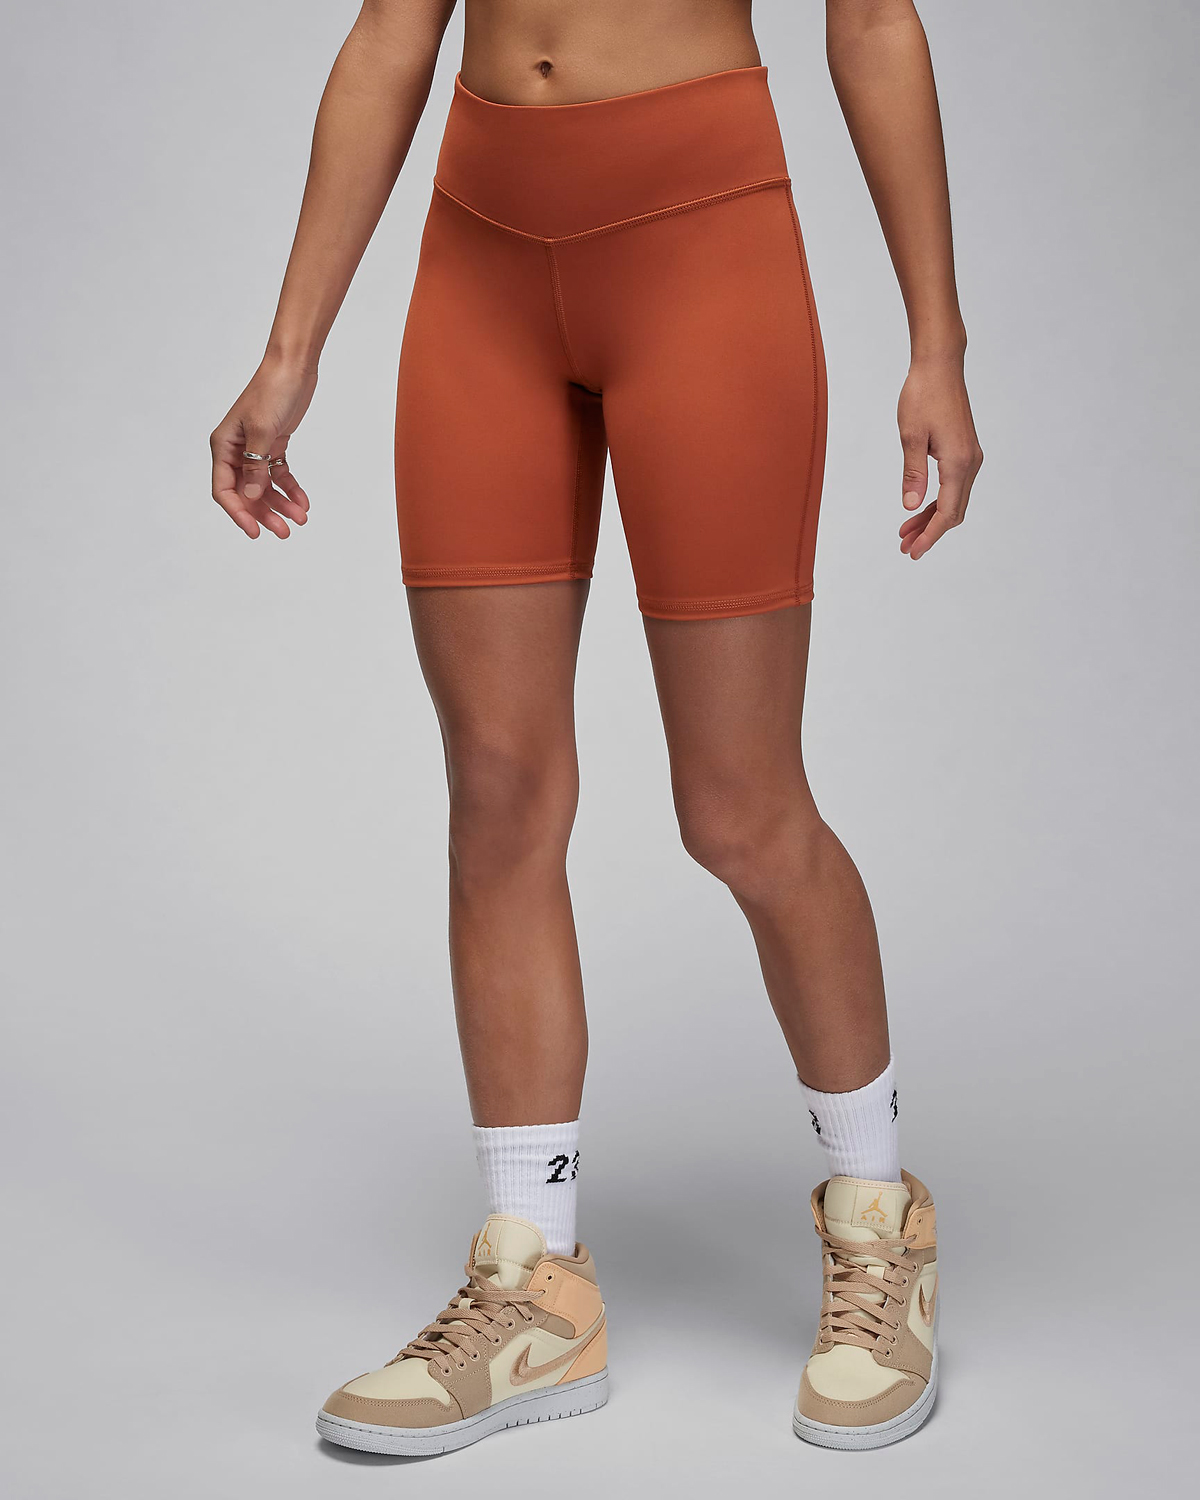 Jordan-Sport-Womens-Bike-Shorts-Dusty-Peach